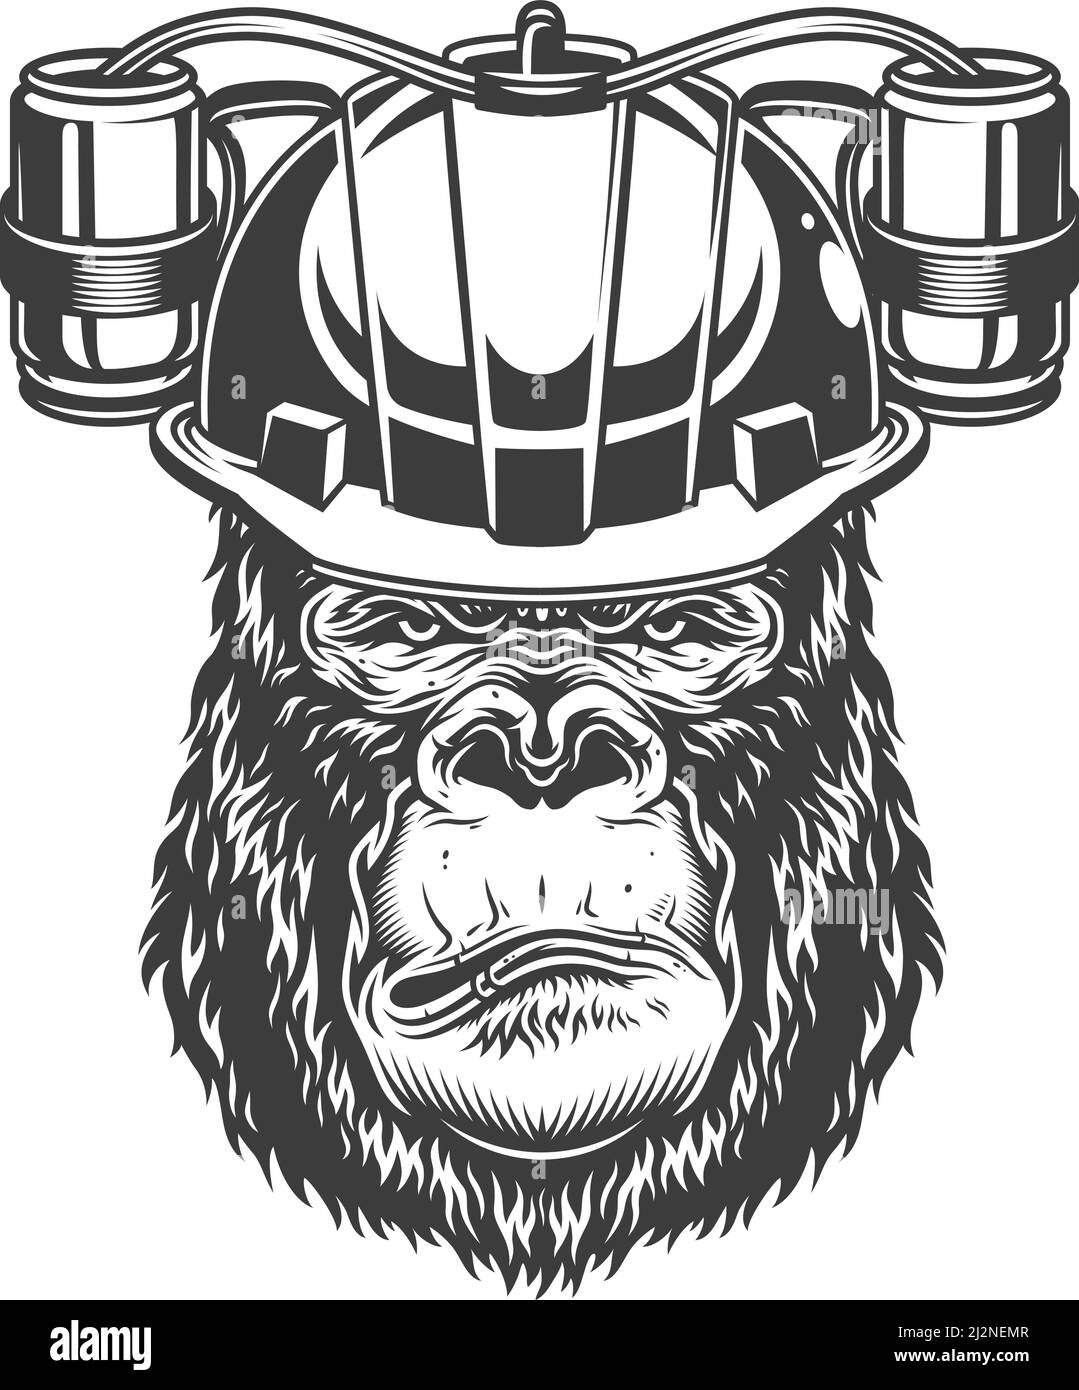 Serious gorilla in monochrome style in bear helmet. Vector illustration Stock Vector